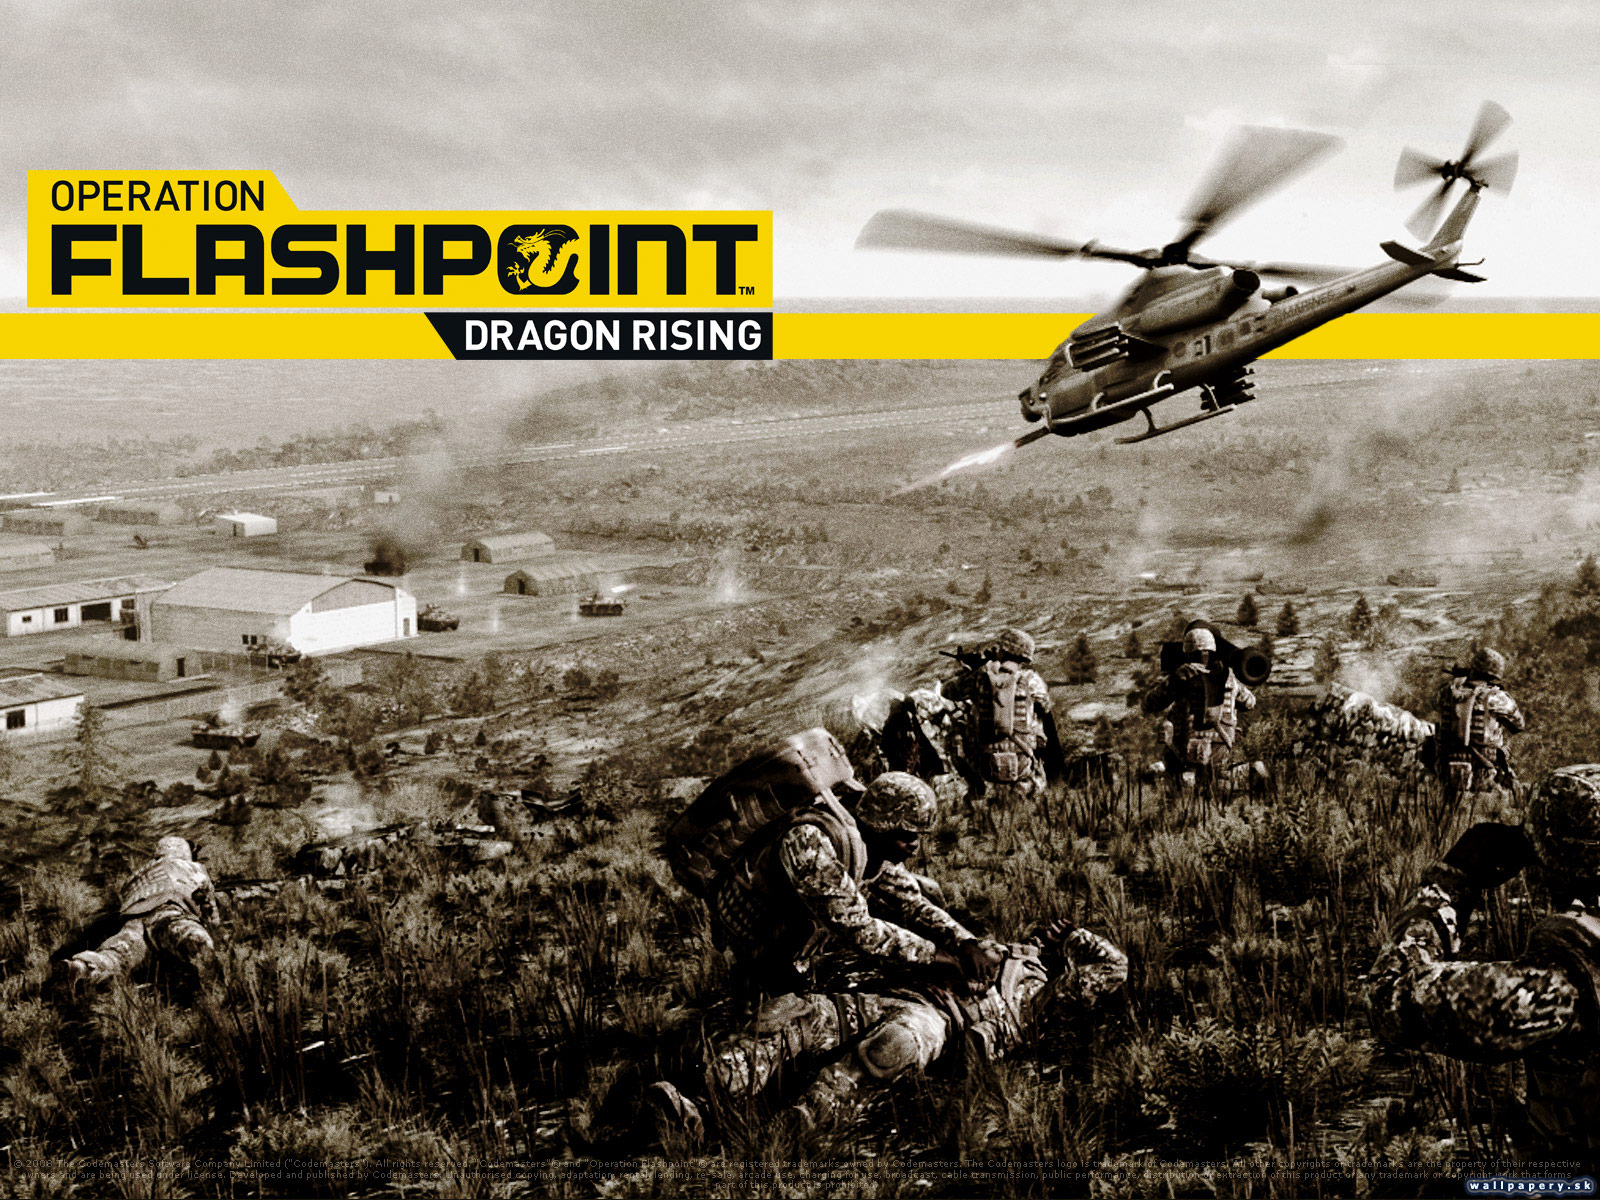 Operation Flashpoint 2: Dragon Rising - wallpaper 10